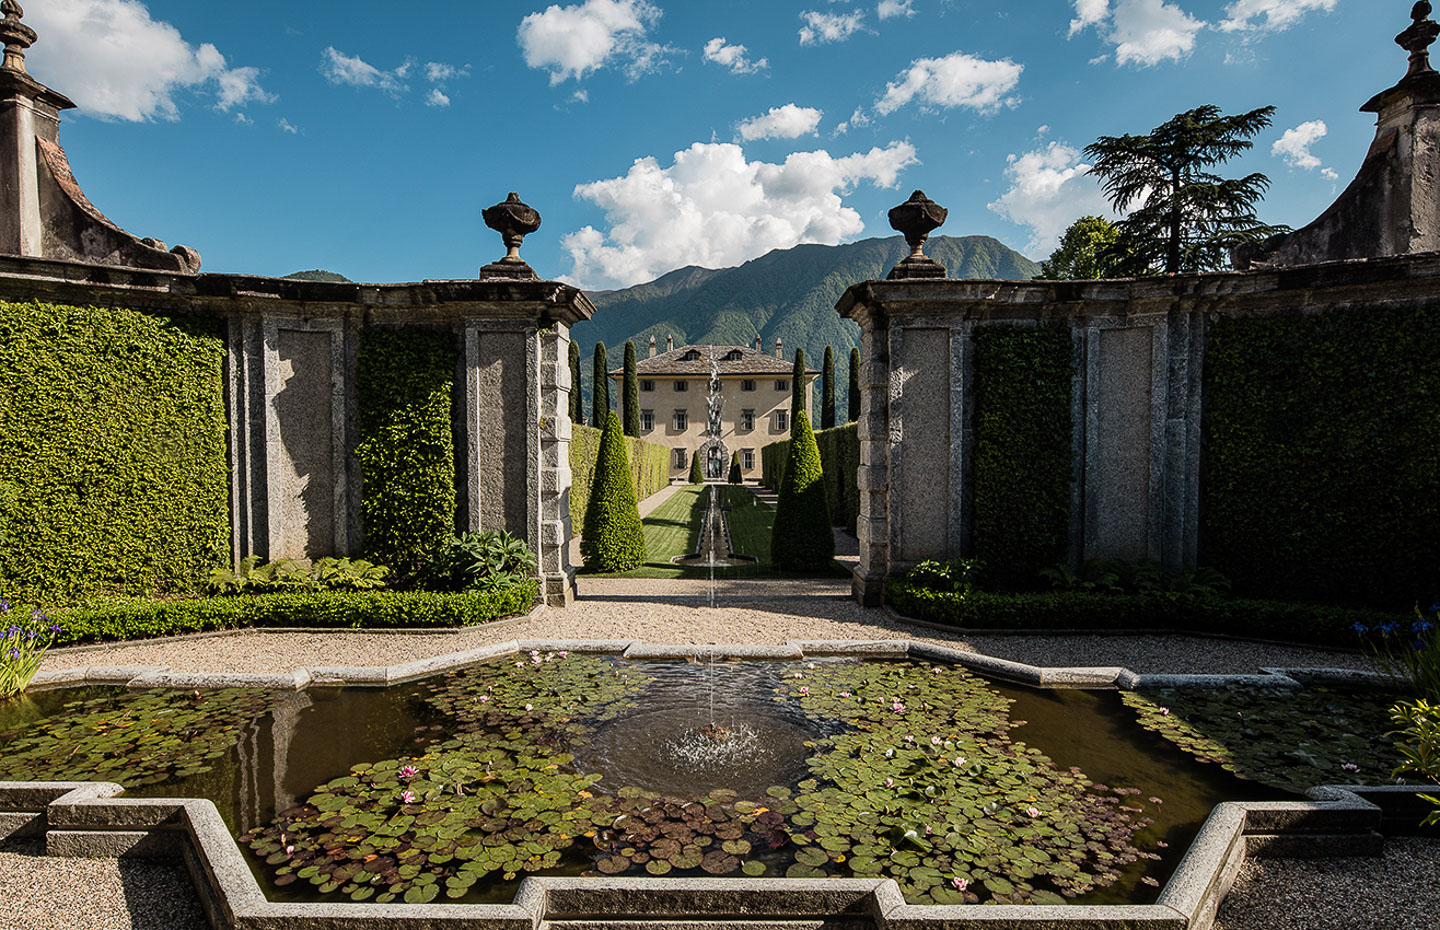 Villa Balbiano luxury property Lake Como oroginal famous provate residence cardinale Durini 17 century fountain lilies pond garden design